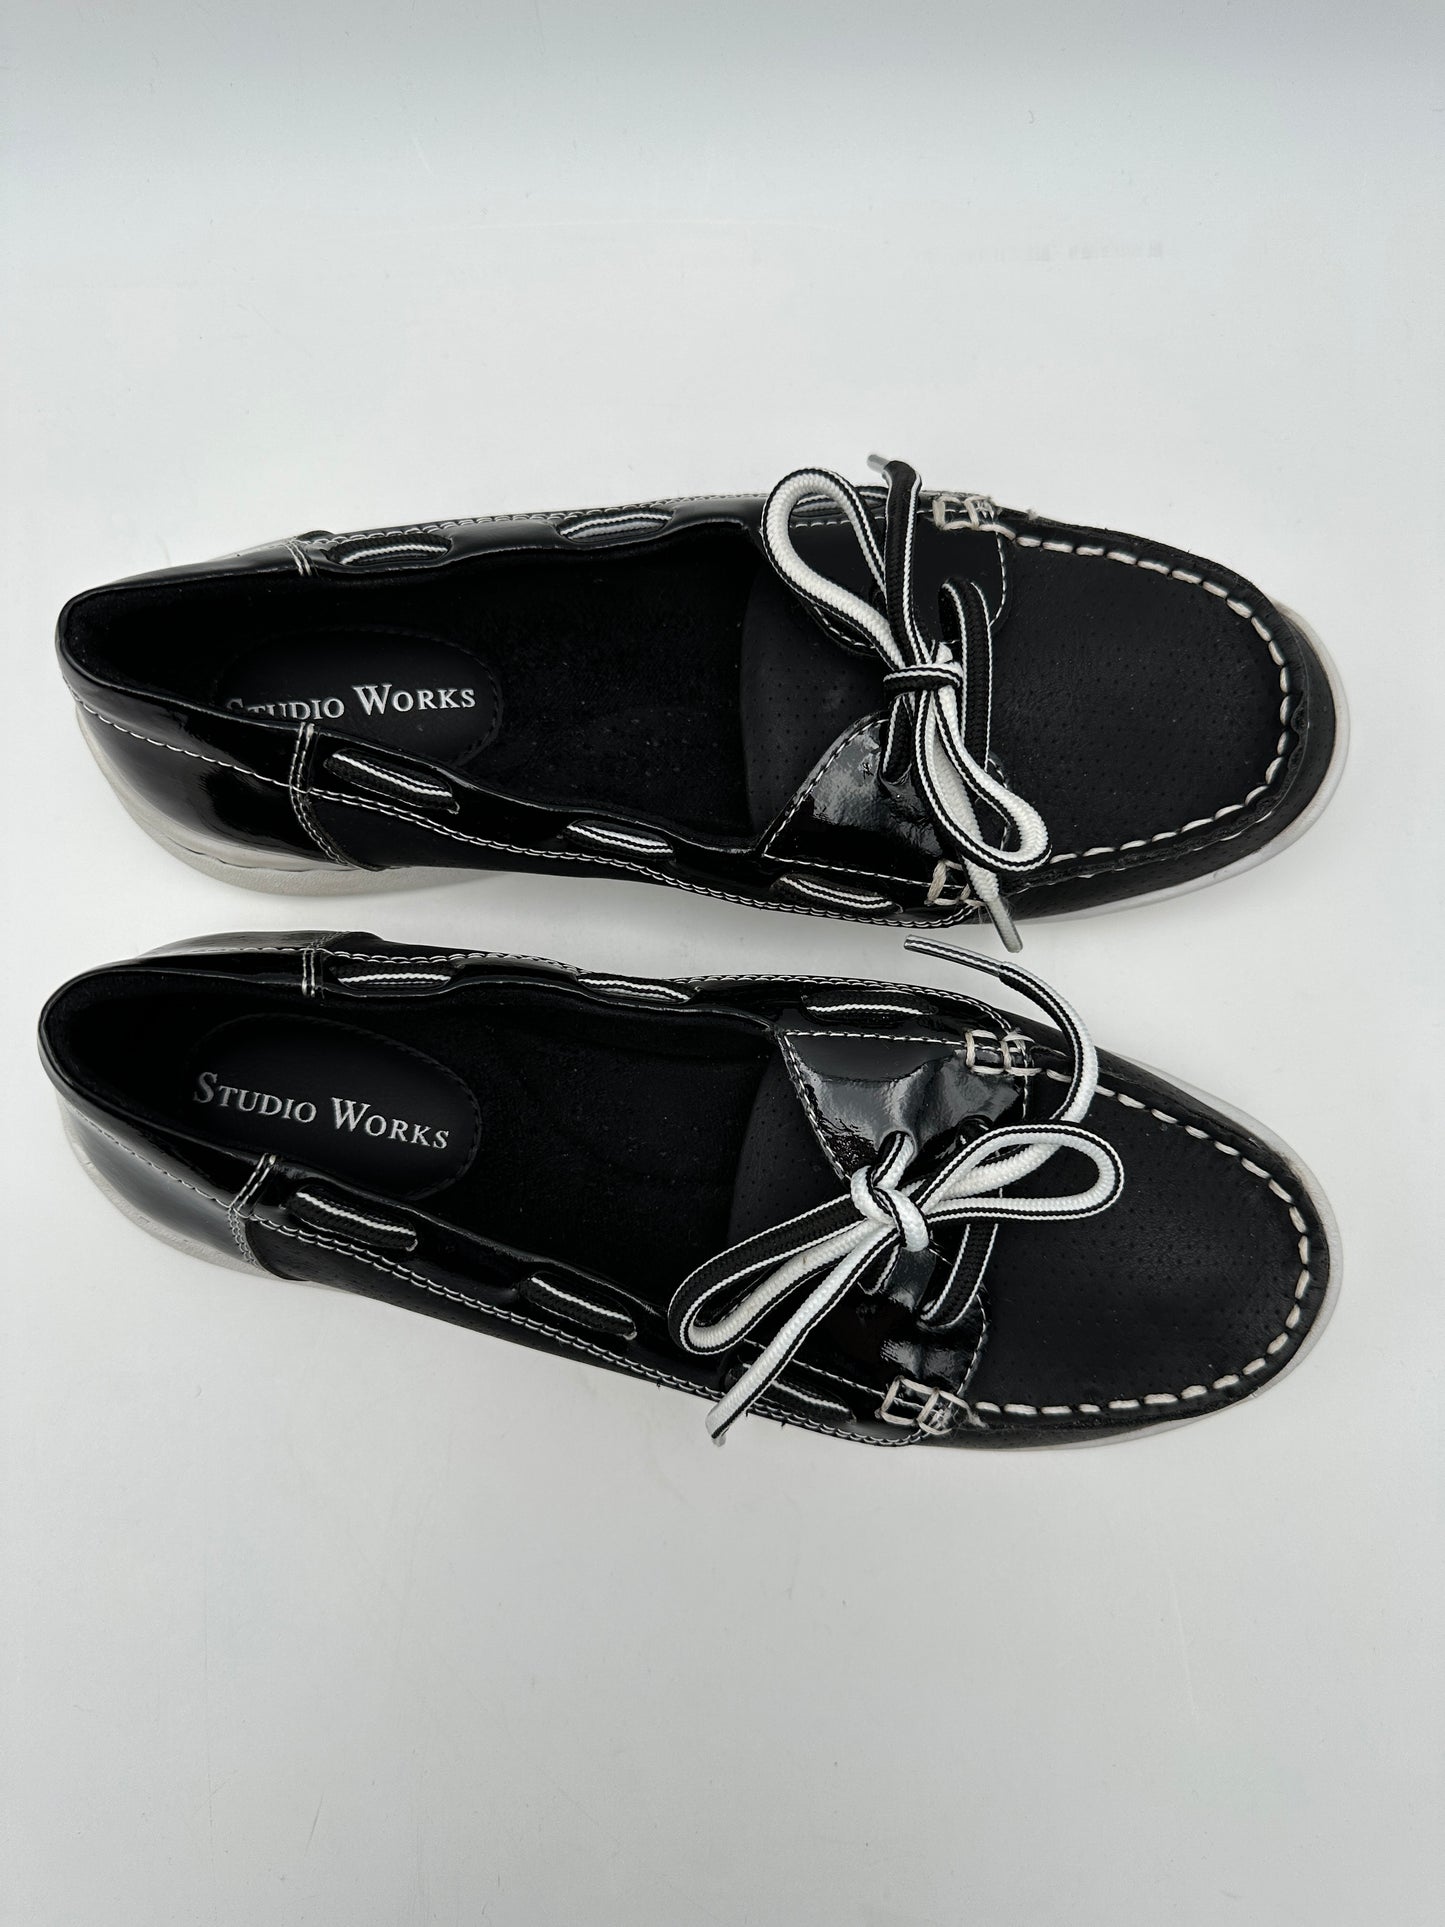 Studio Works Size 6.5 M Black "Sunny" Boat Shoes